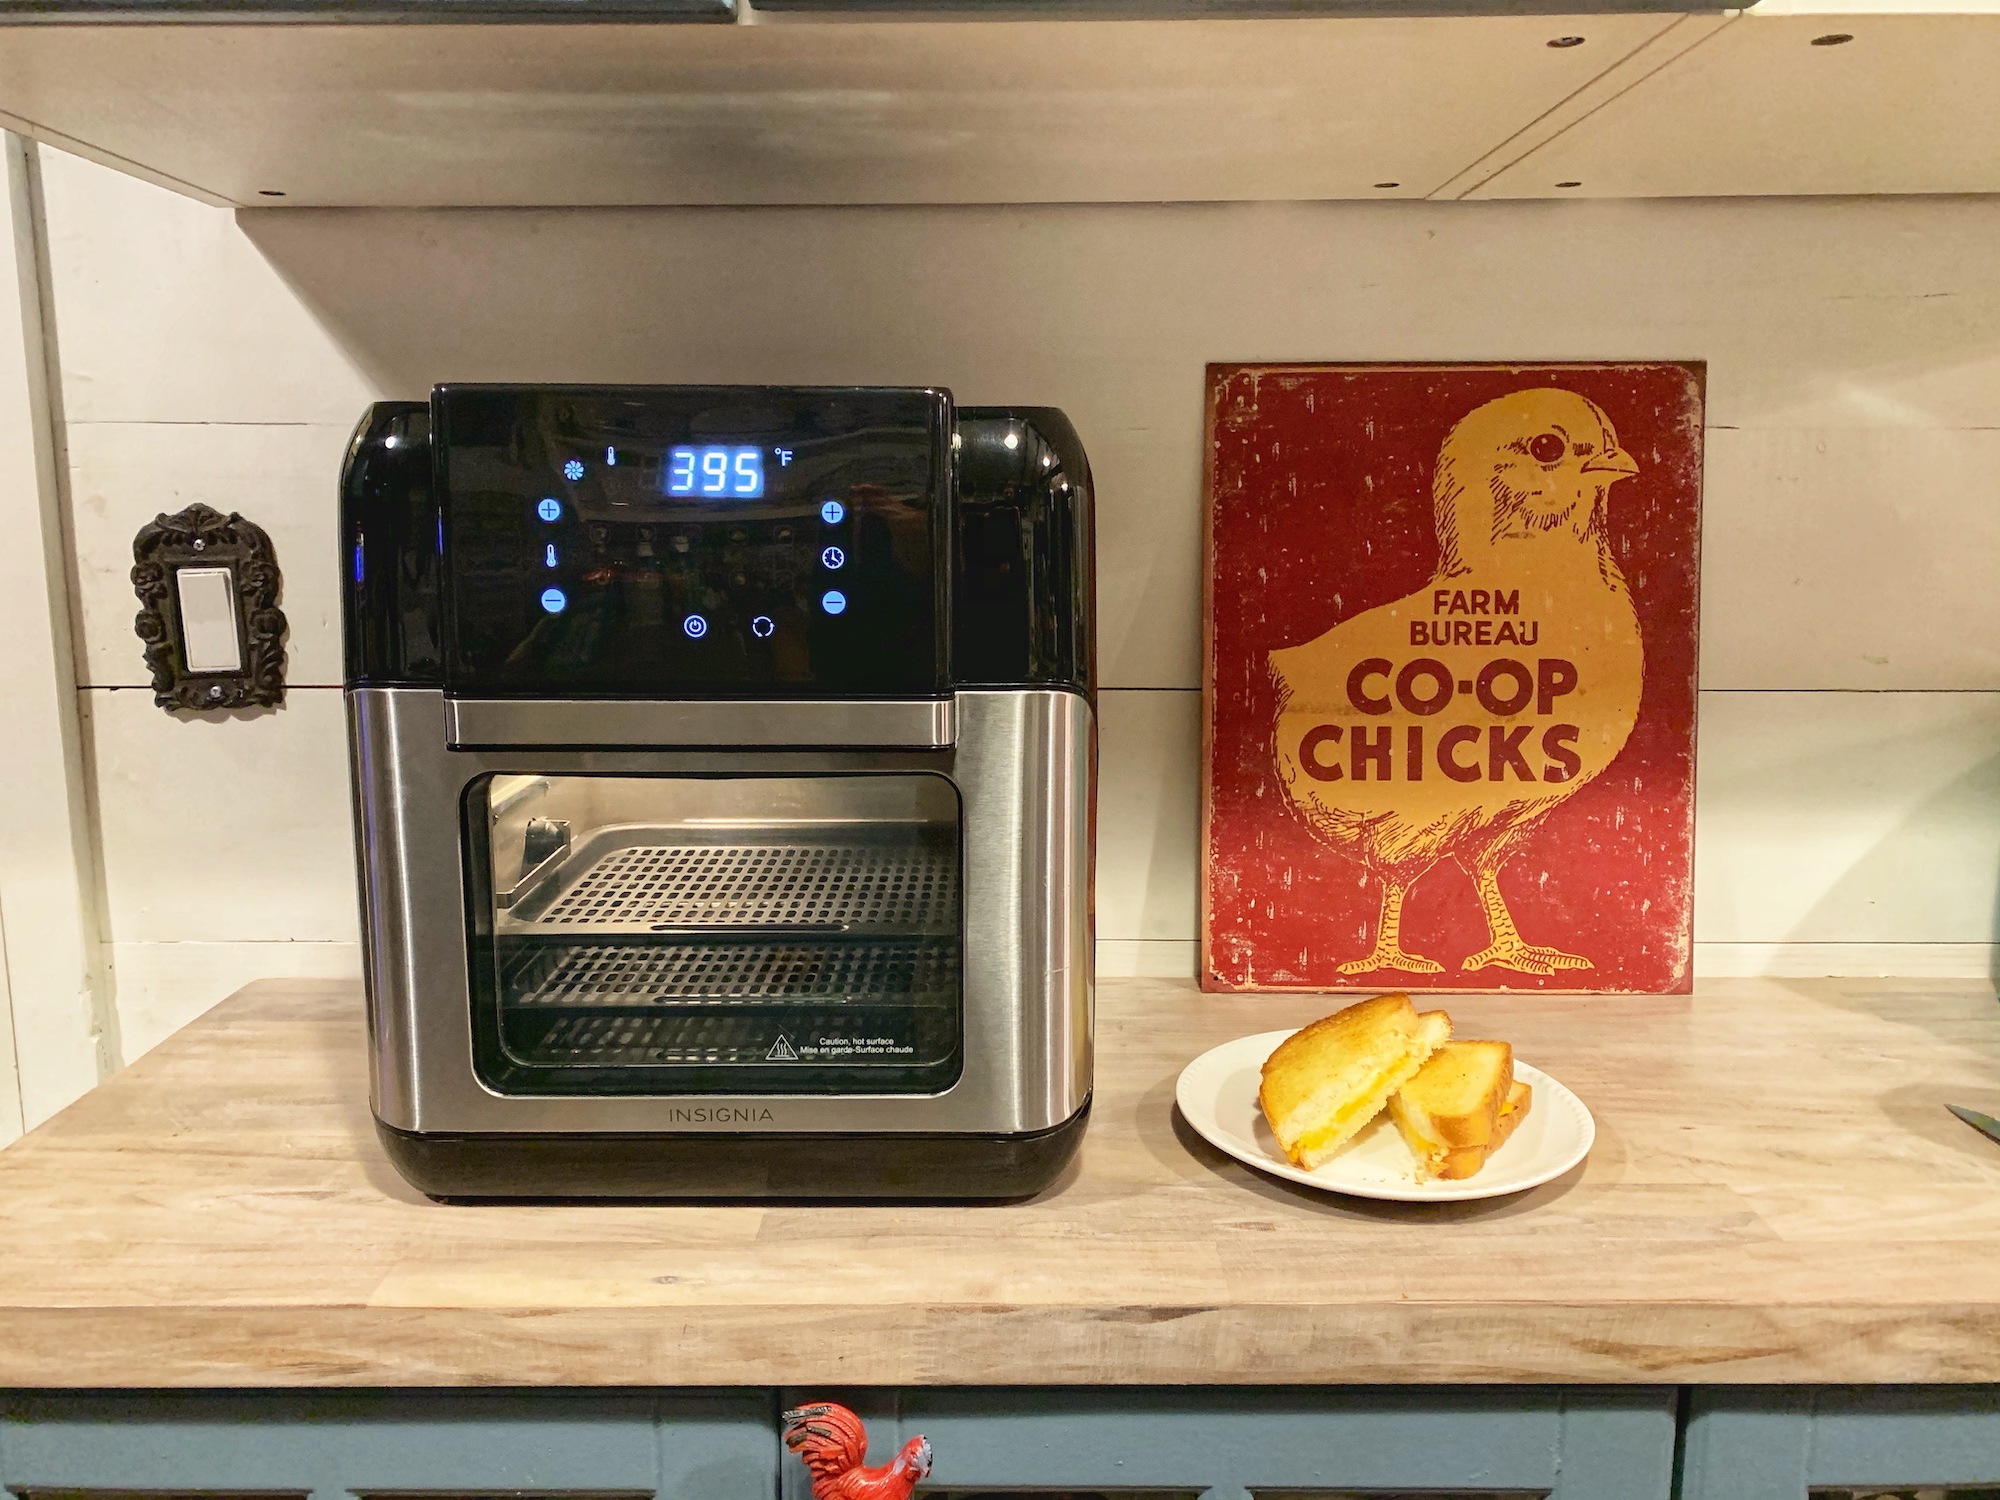 Insignia 10 QT Air Fryer Oven Review 